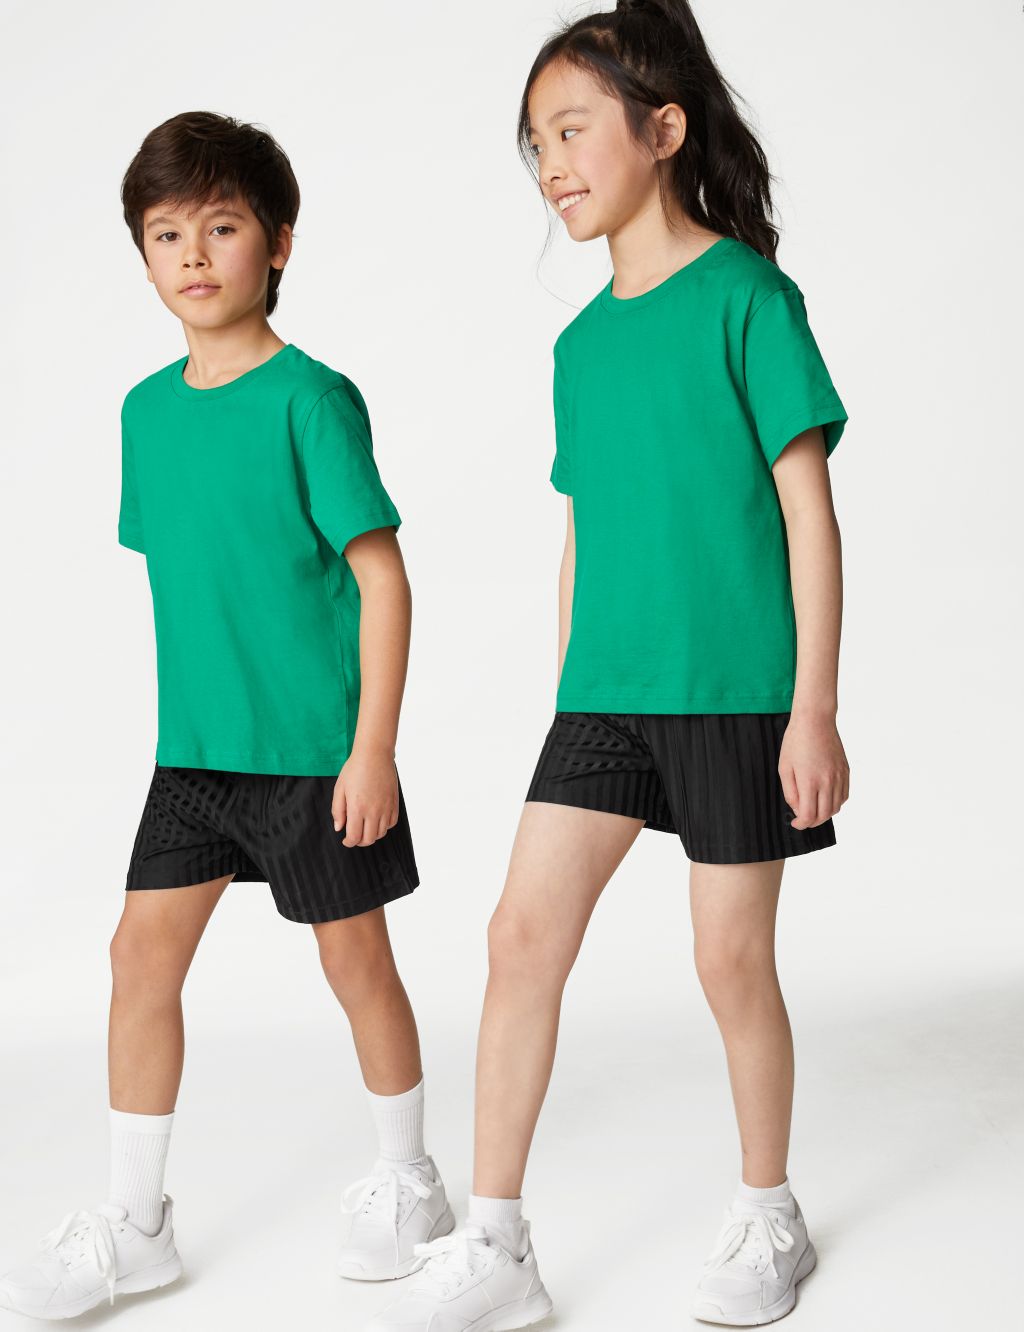 Girls' Athletic Shorts, Kids' Shorts